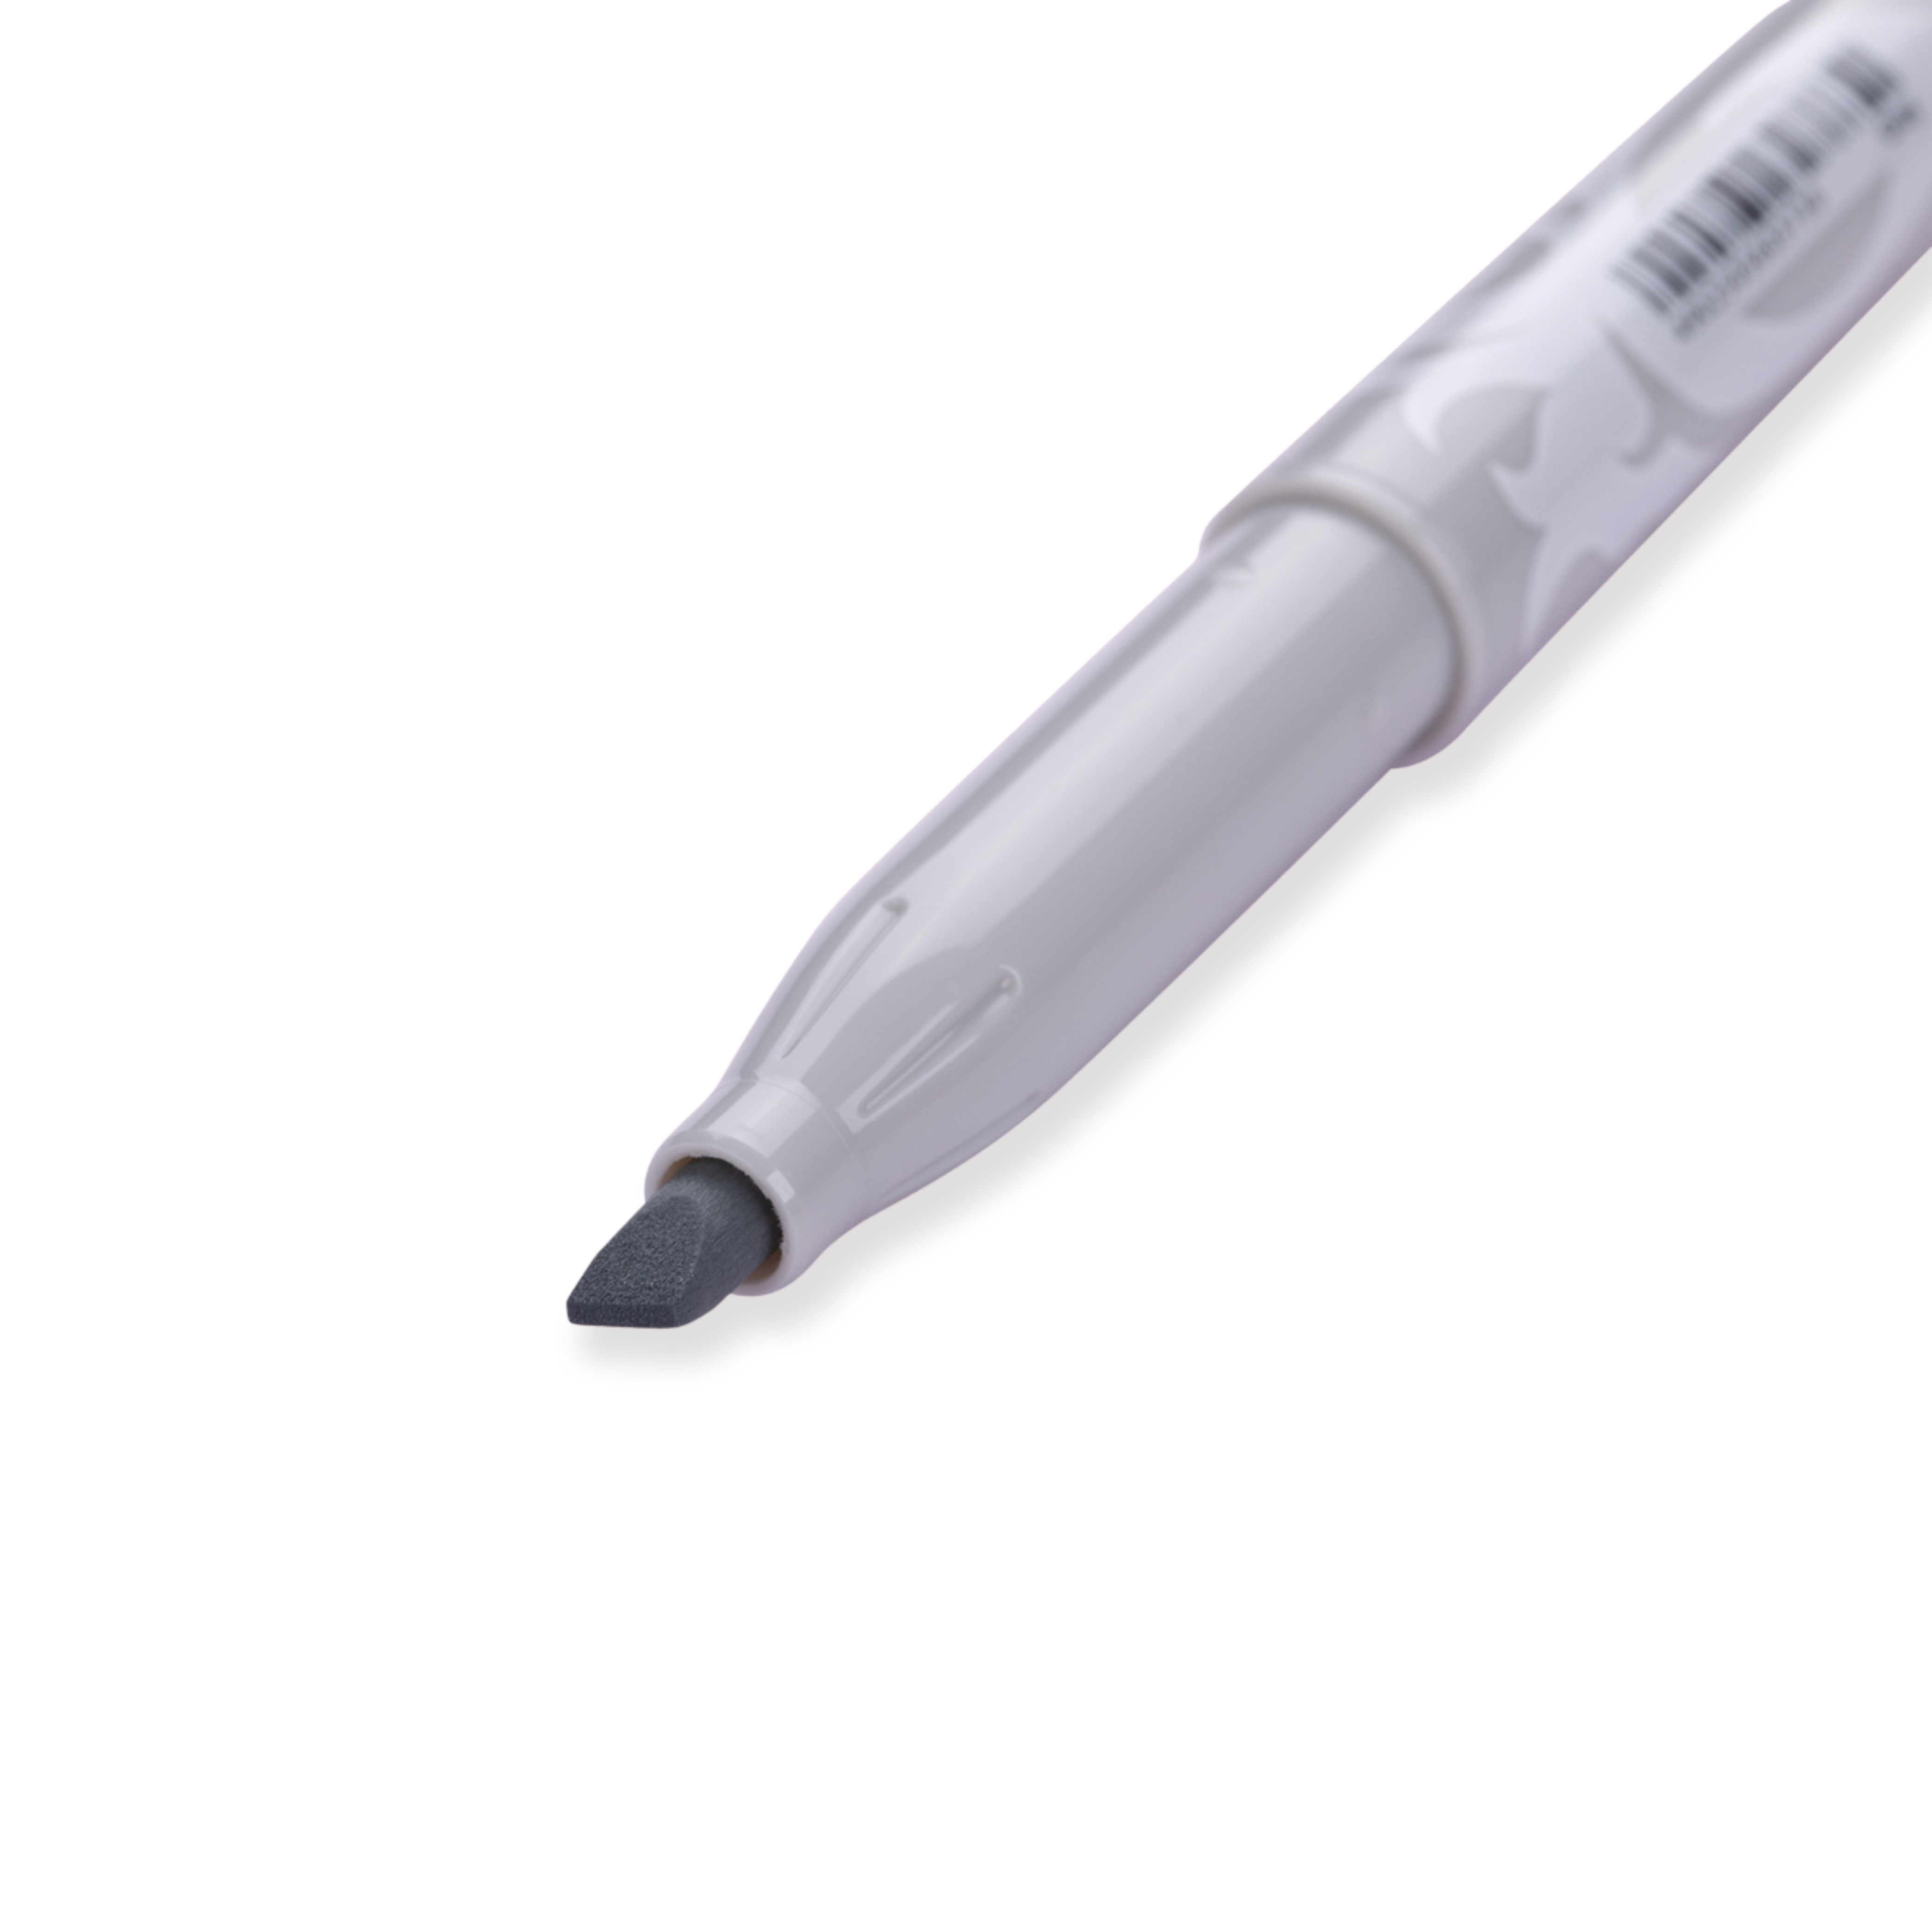 Pilot FriXion Light Natural Colors Highlighter pen - Medium Tip - Gray